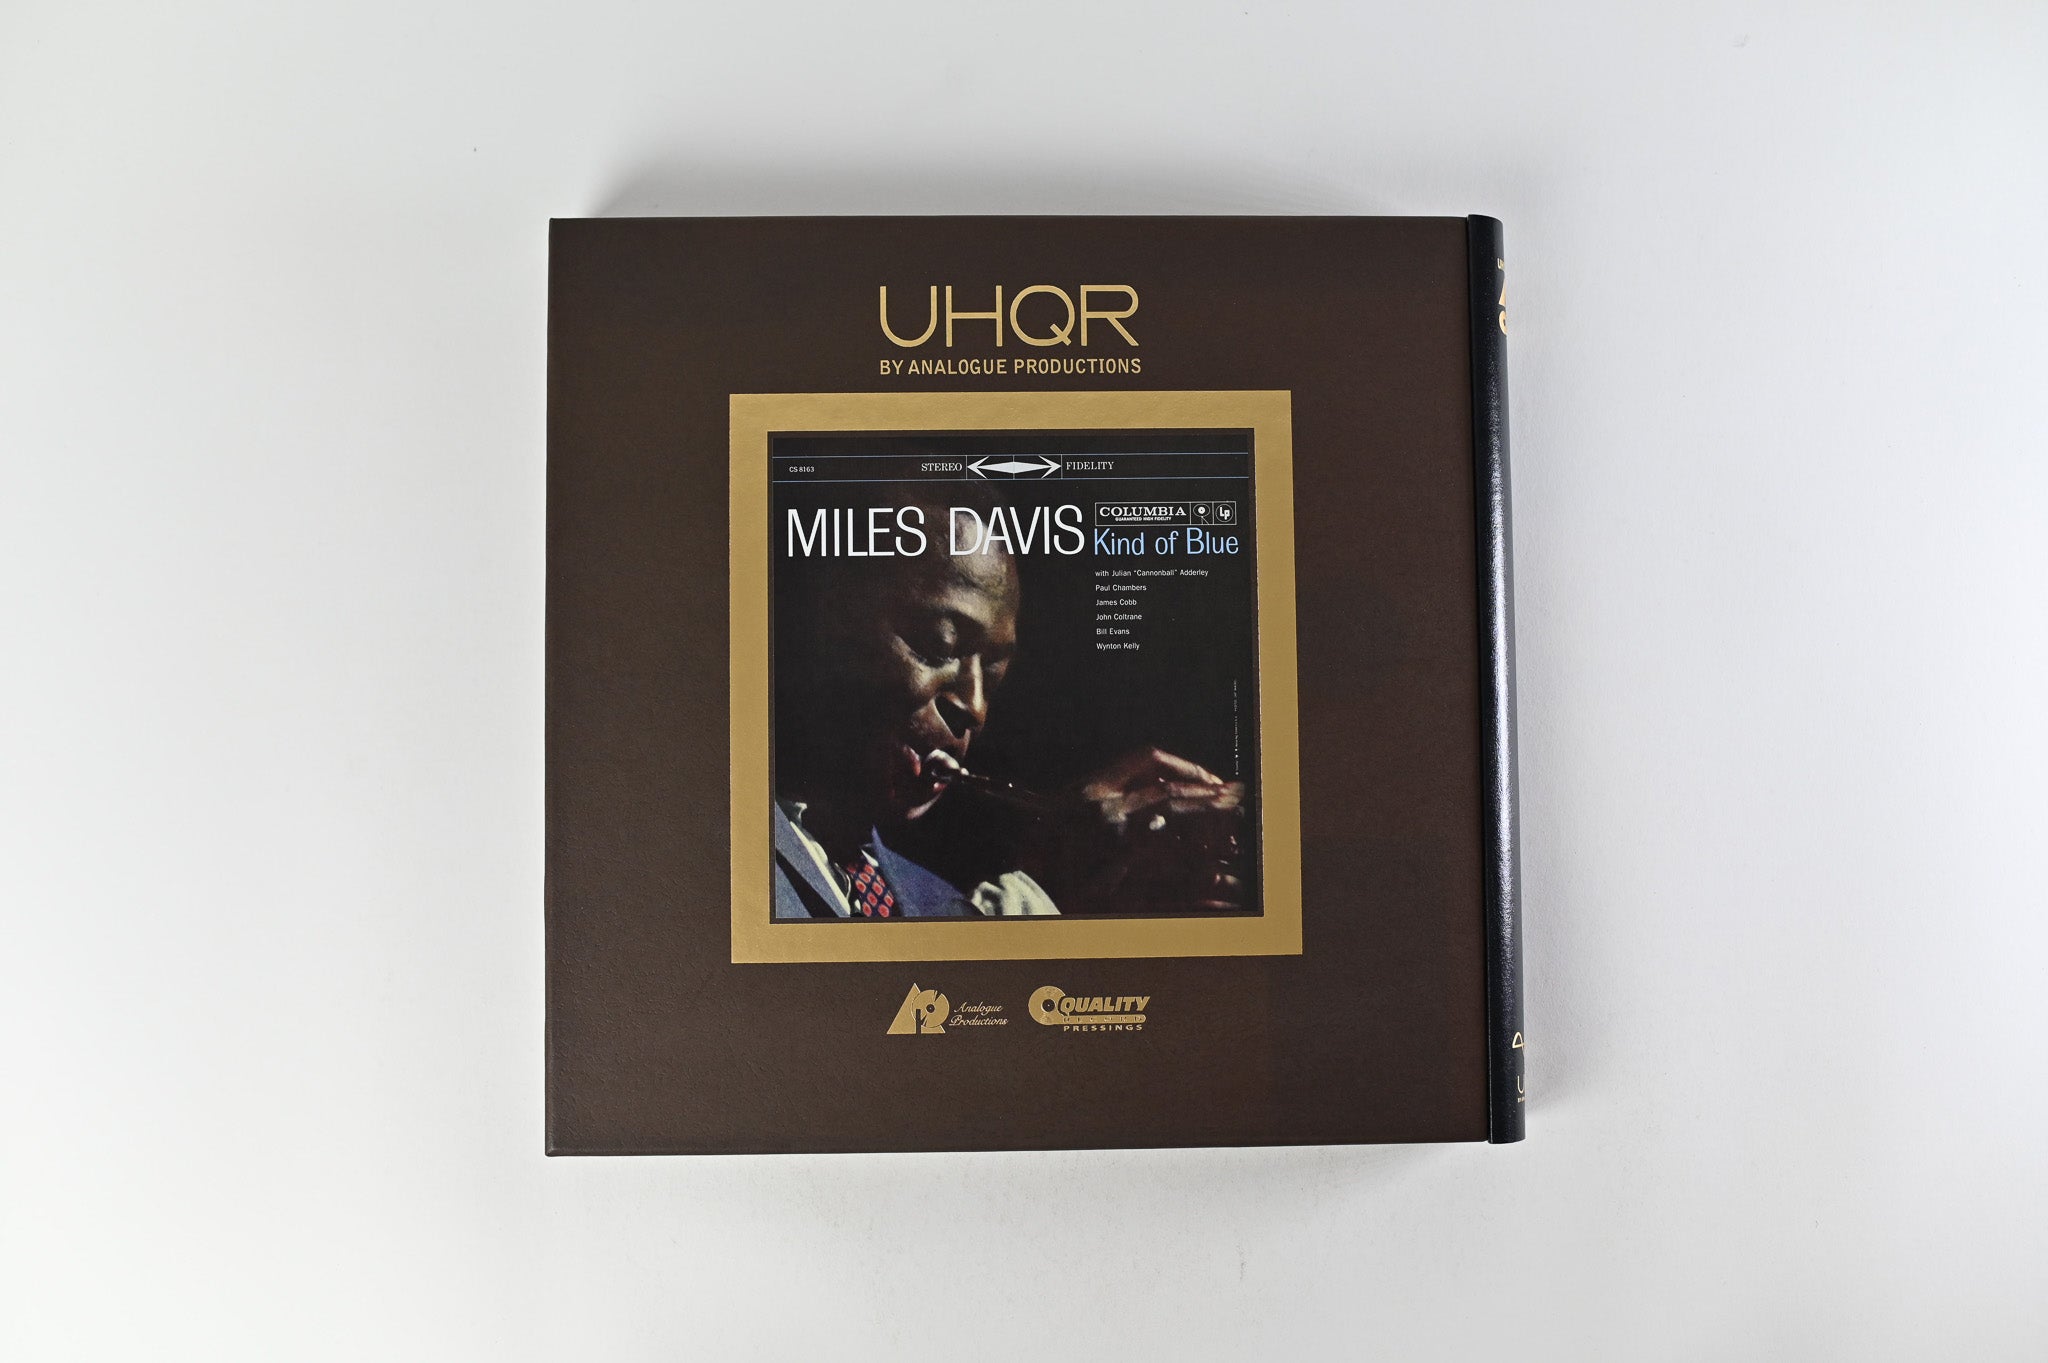 Miles Davis - Kind Of Blue on Columbia Analogue Productions Ltd UHQR Box Set Reissue